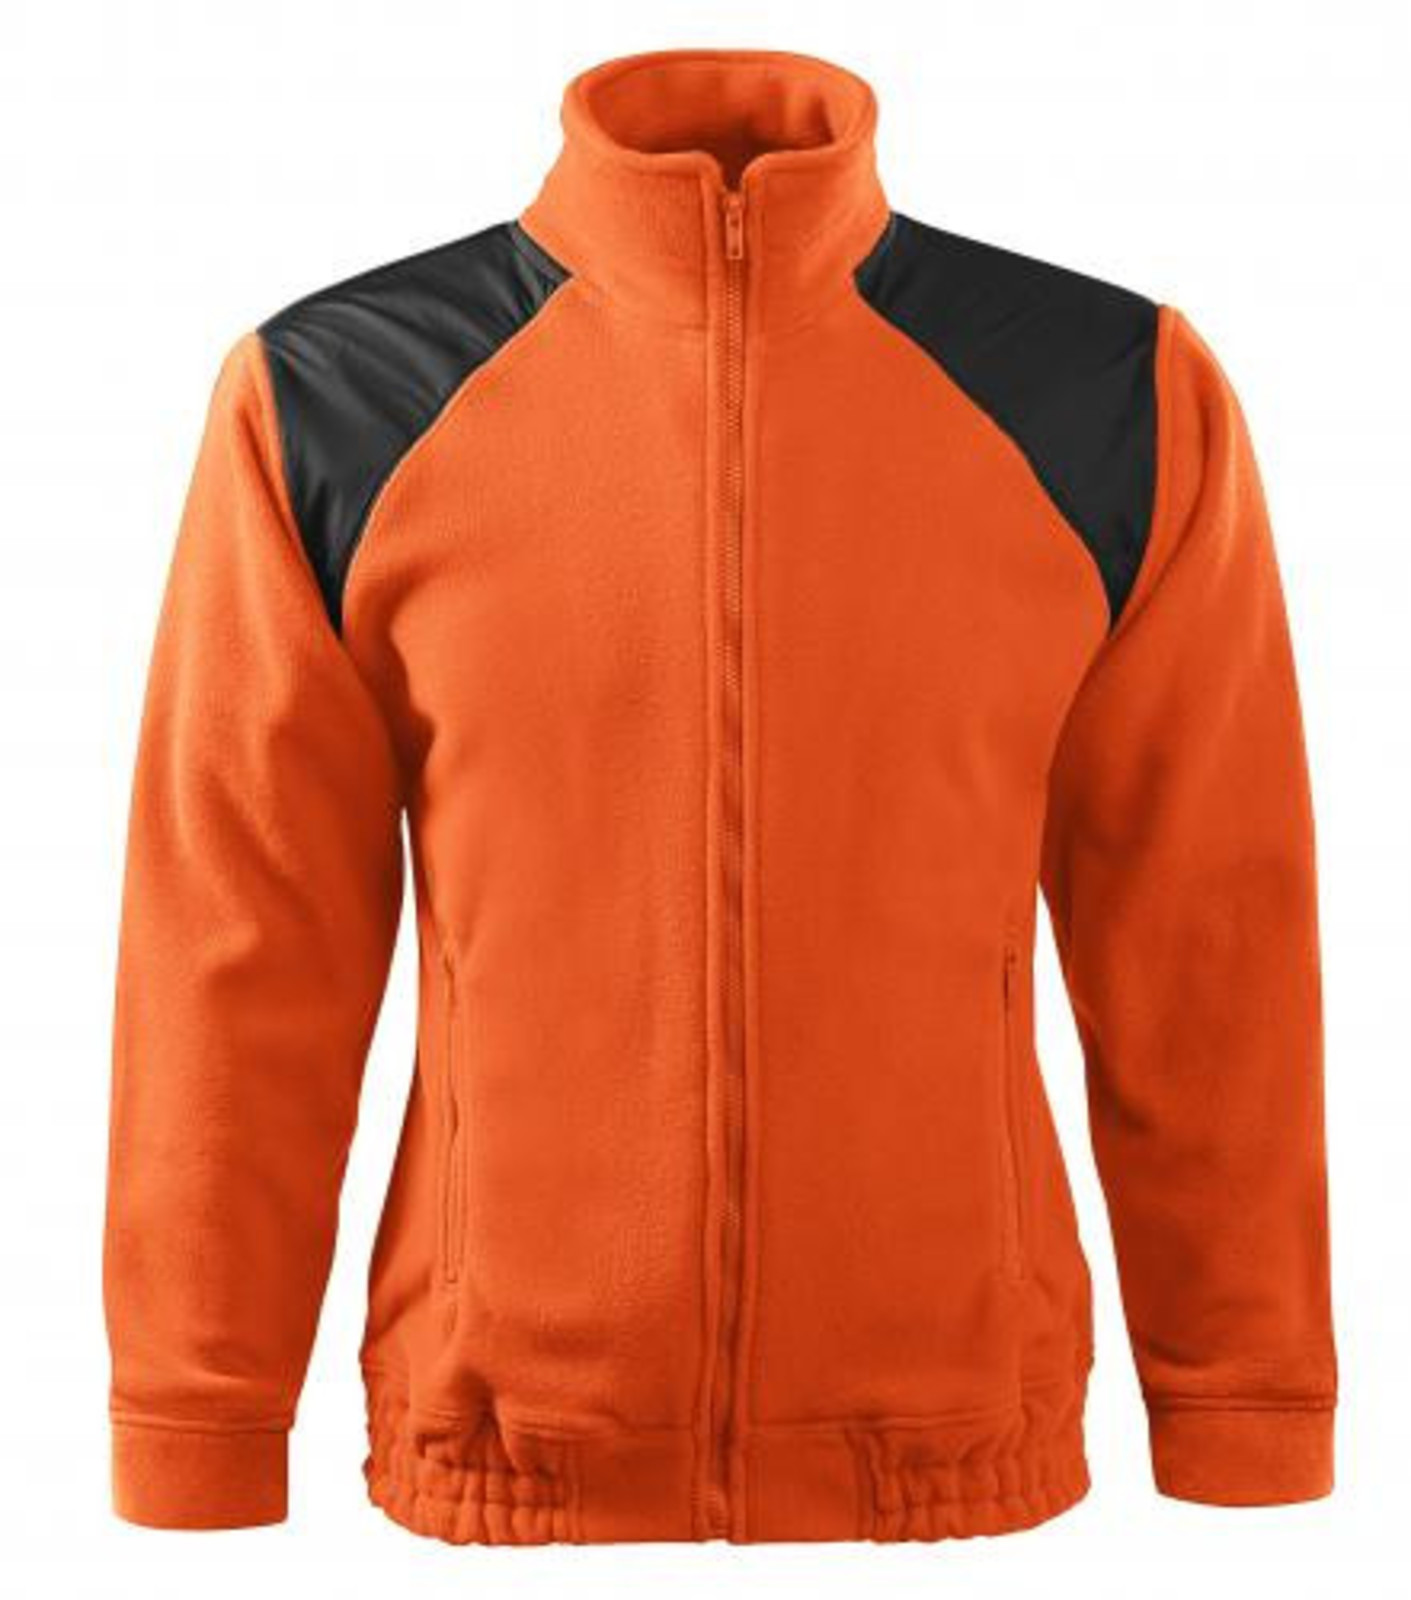 Unisex mikina Rimeck Jacket HI-Q 506 - veľkosť: XL, farba: oranžová